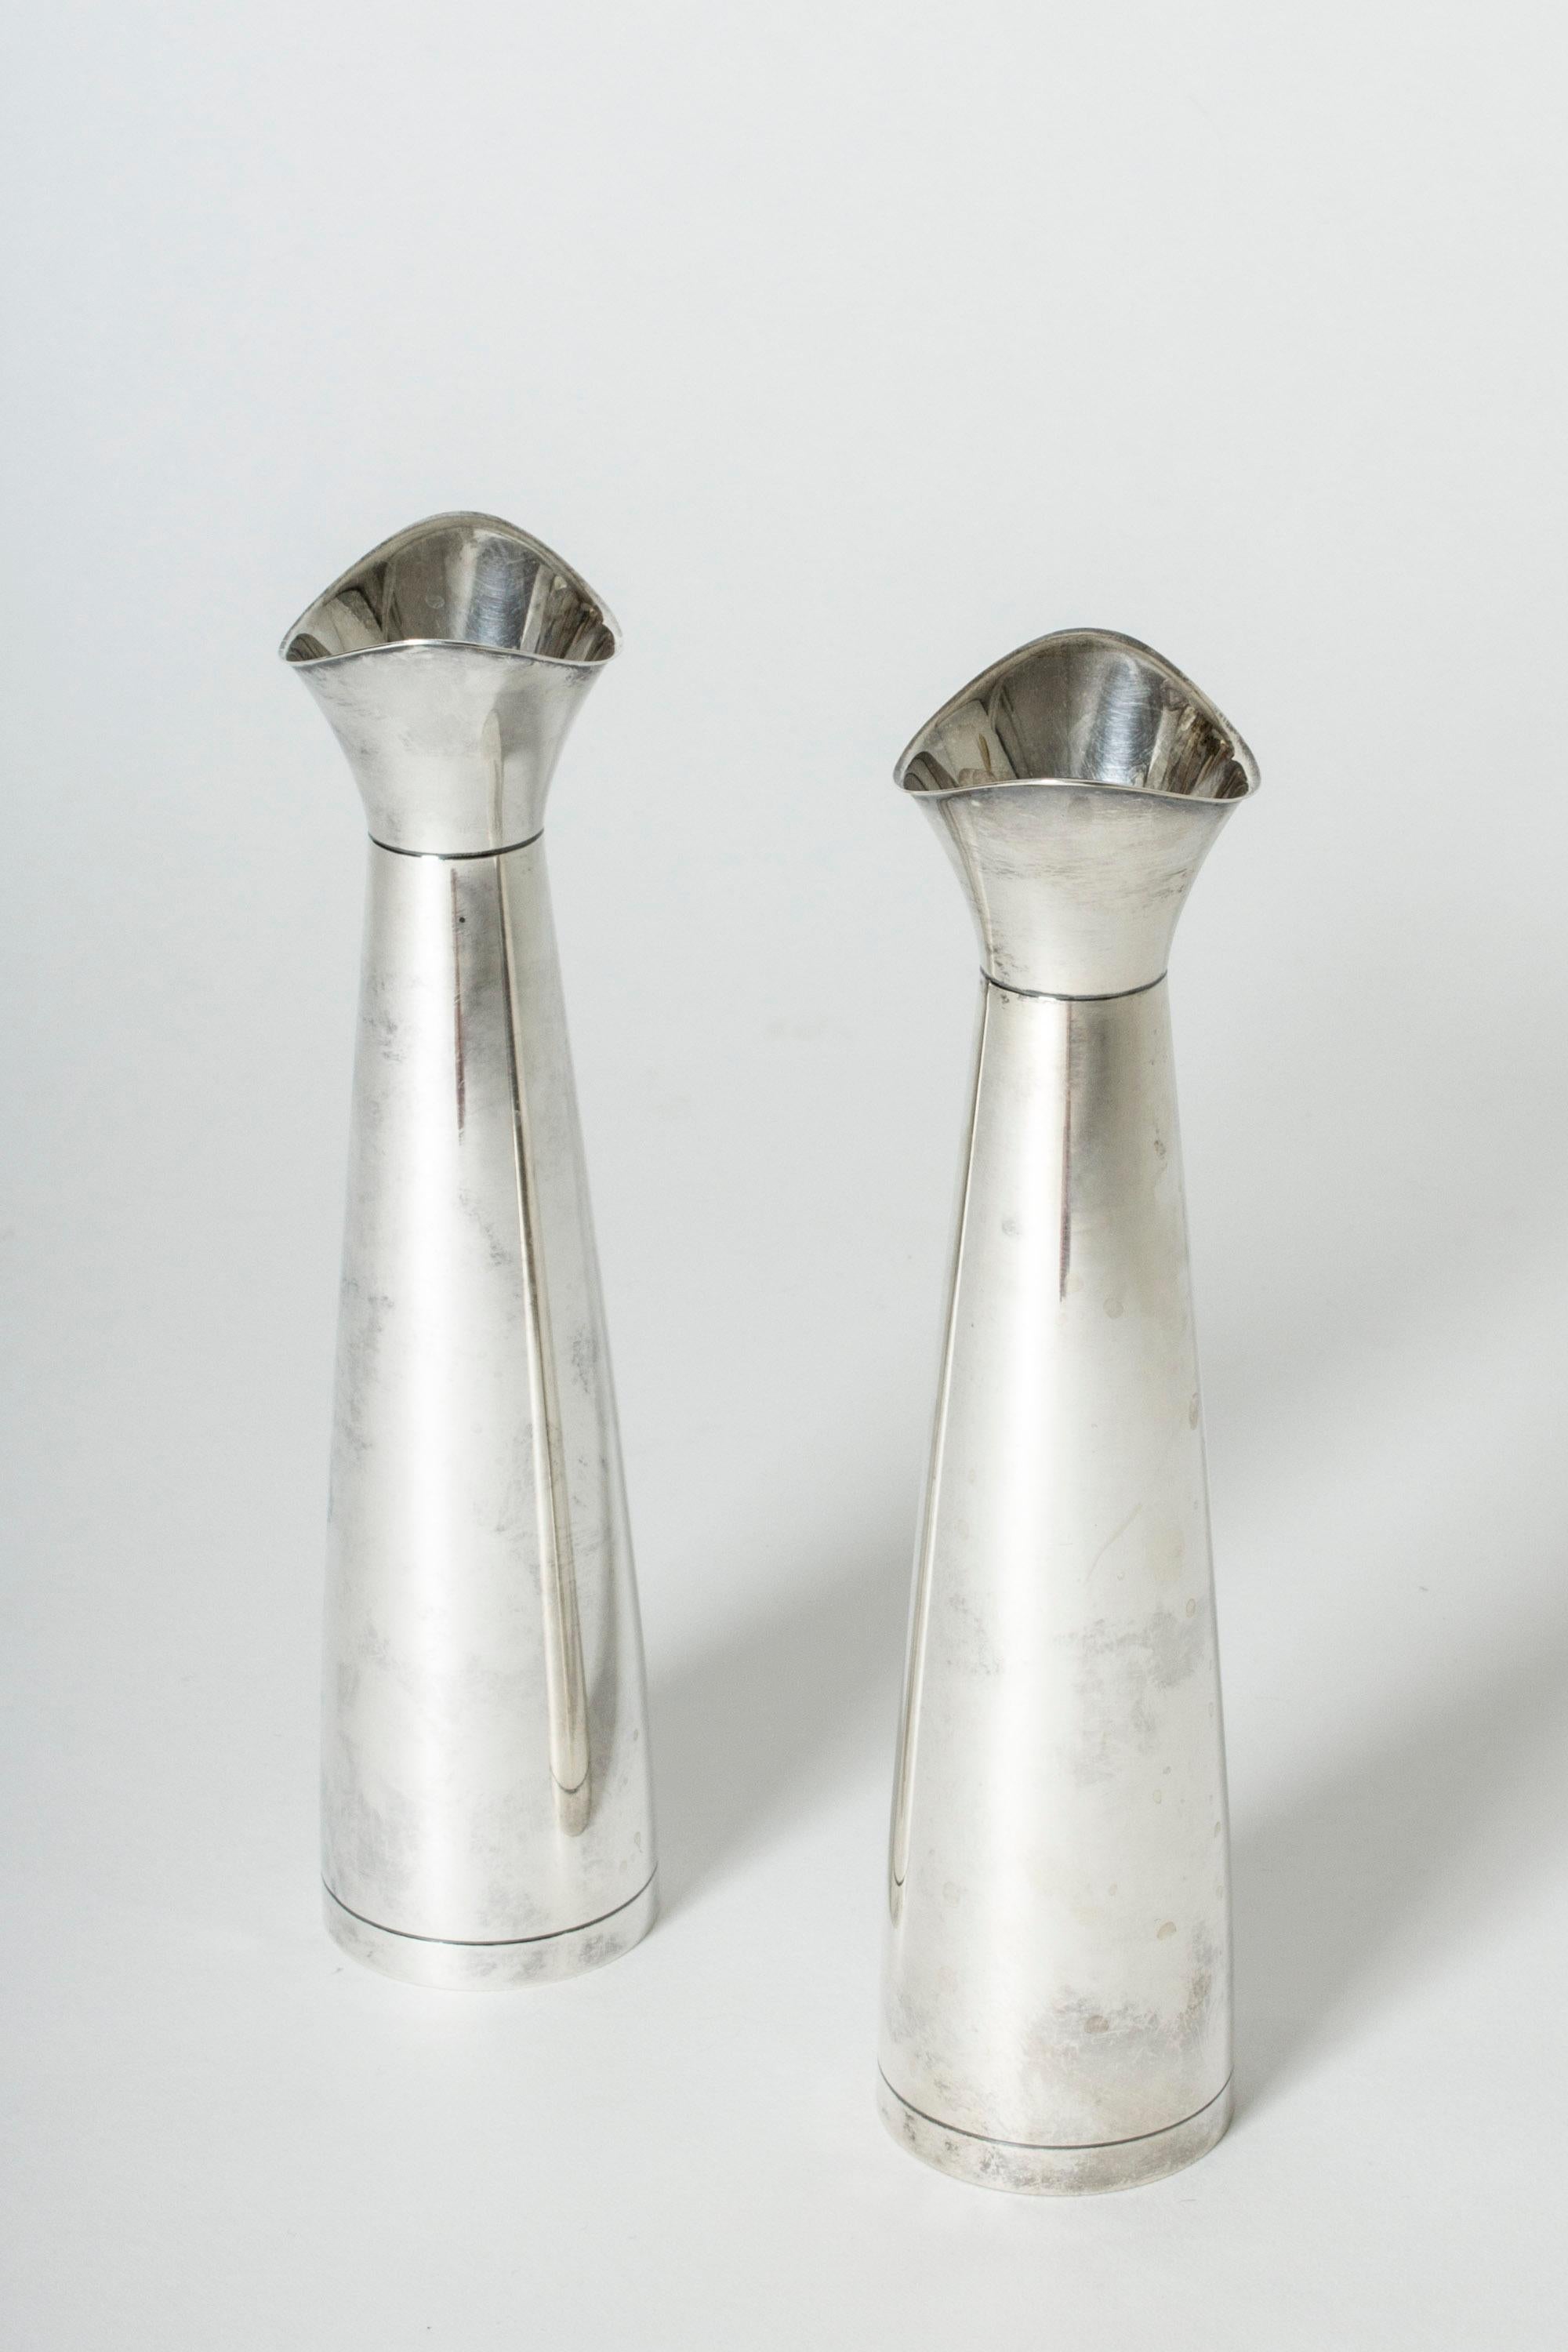 Scandinavian Modern Pair of Silver Vases, Gustaf Jansson, C. G. Hallberg, Sweden, 1961 For Sale